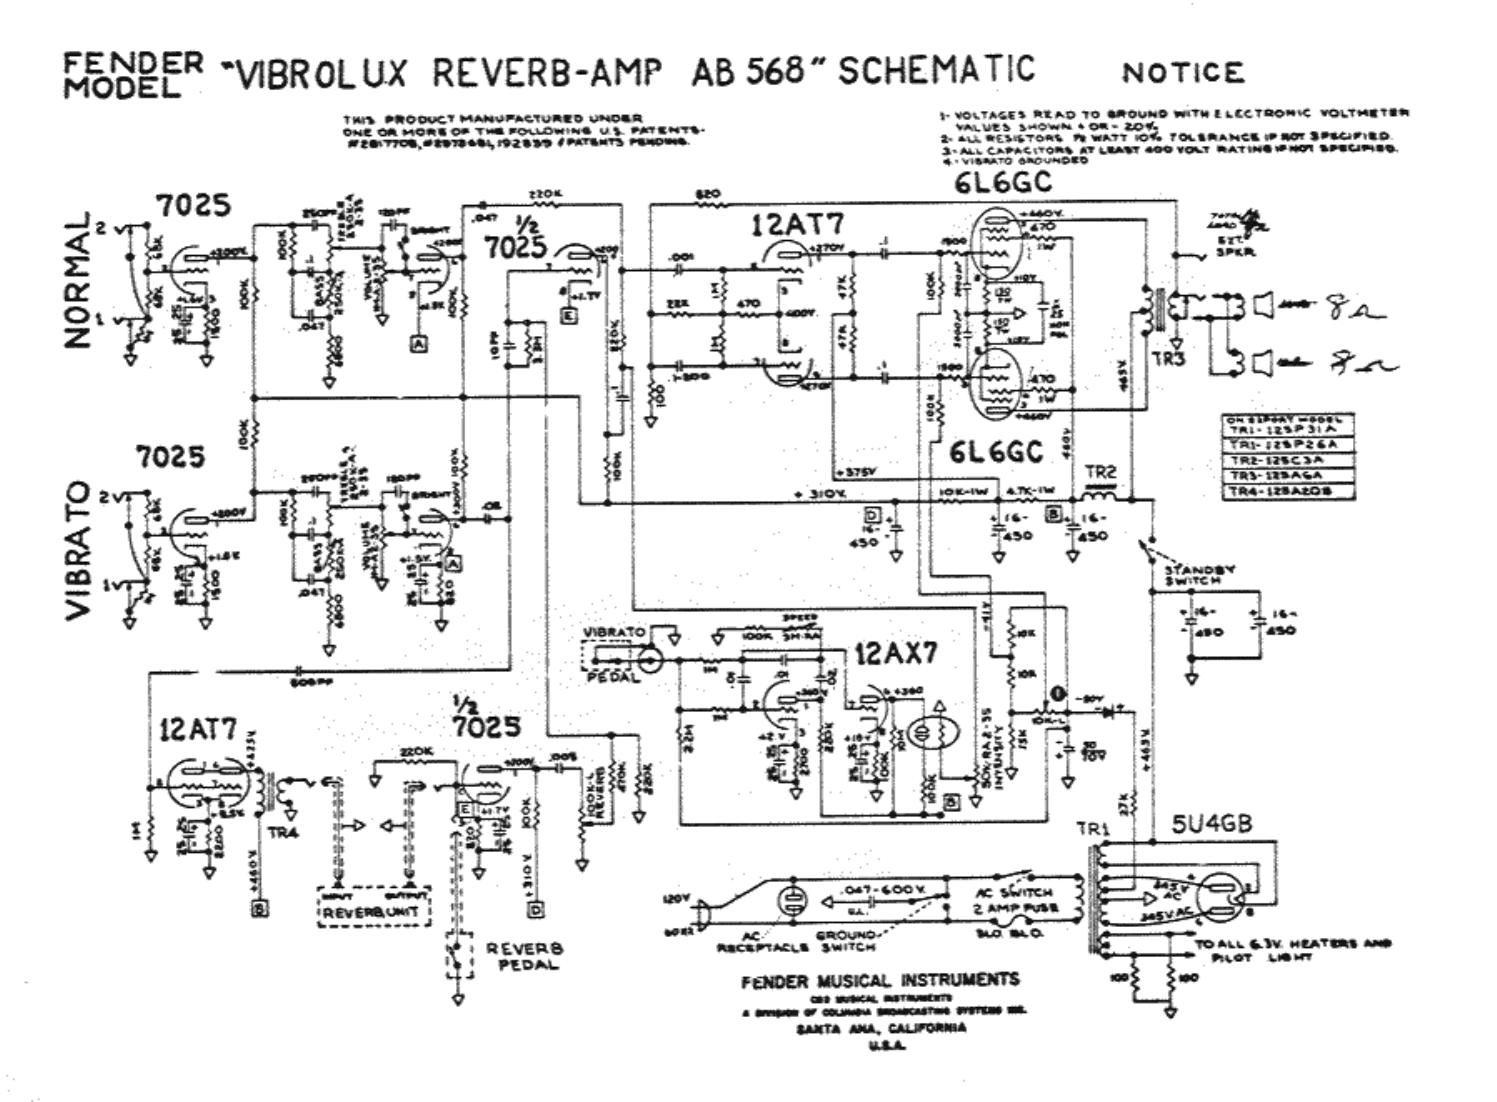 fender vibrolux reverb ab568 schematic